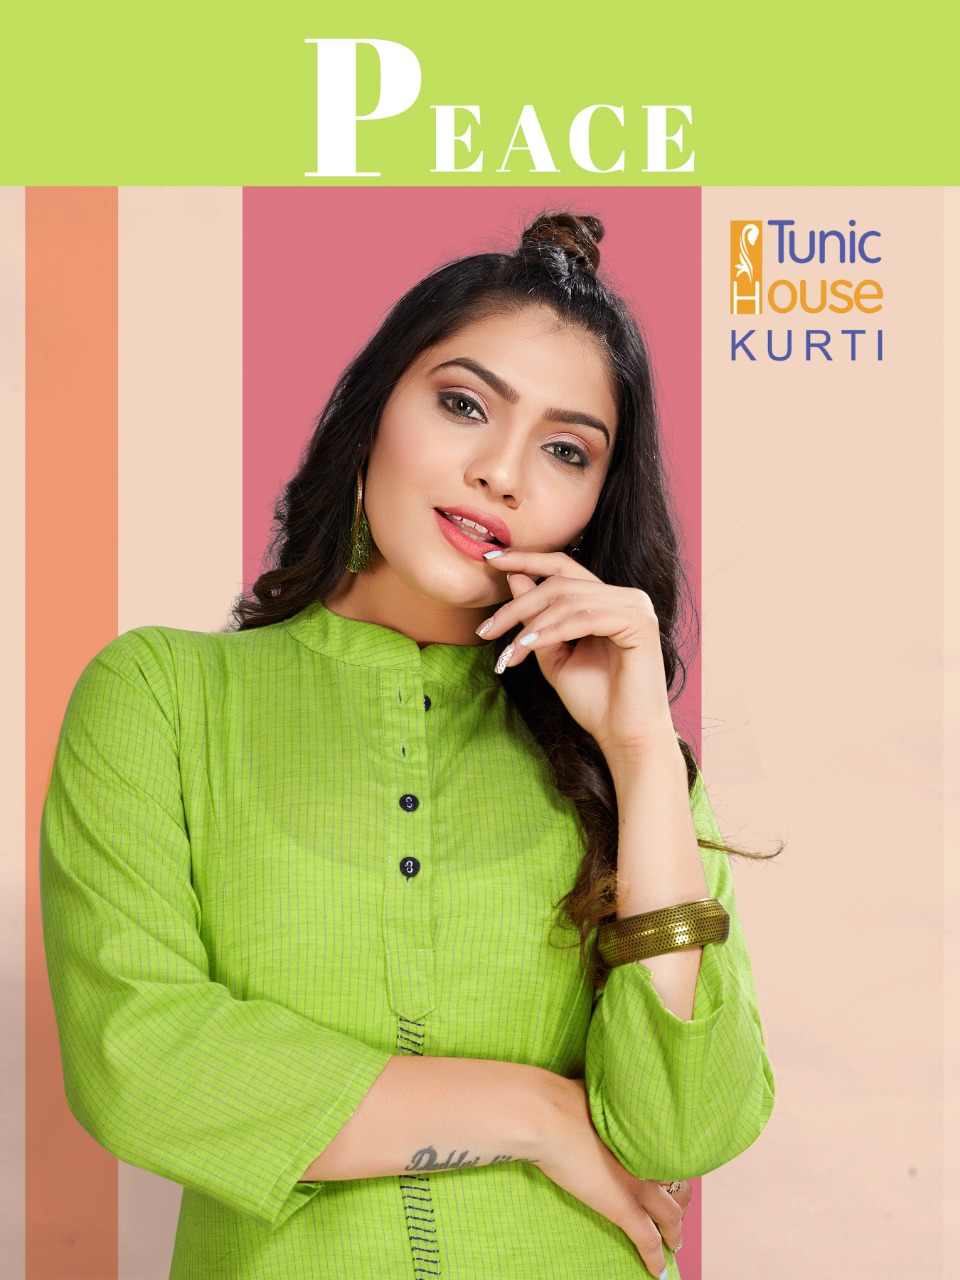 Tunic House Kurti Peace Designer Cotton Readymade Kurtis At ...